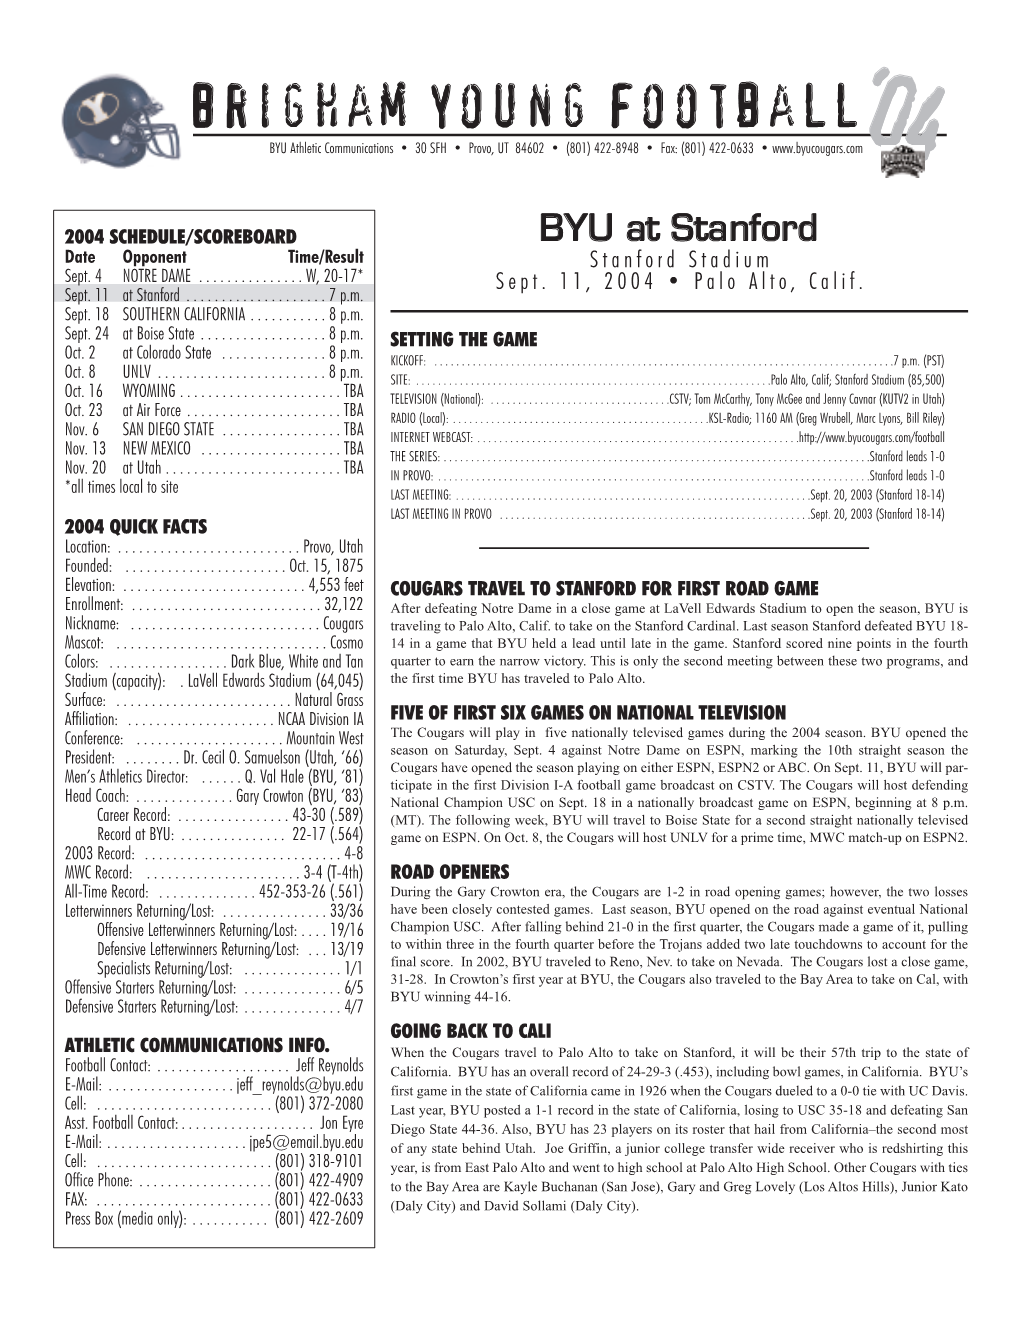 Brigham Young Football‘04 BYU Athletic Communications • 30 SFH • Provo, UT 84602 • (801) 422-8948 • Fax: (801) 422-0633 •